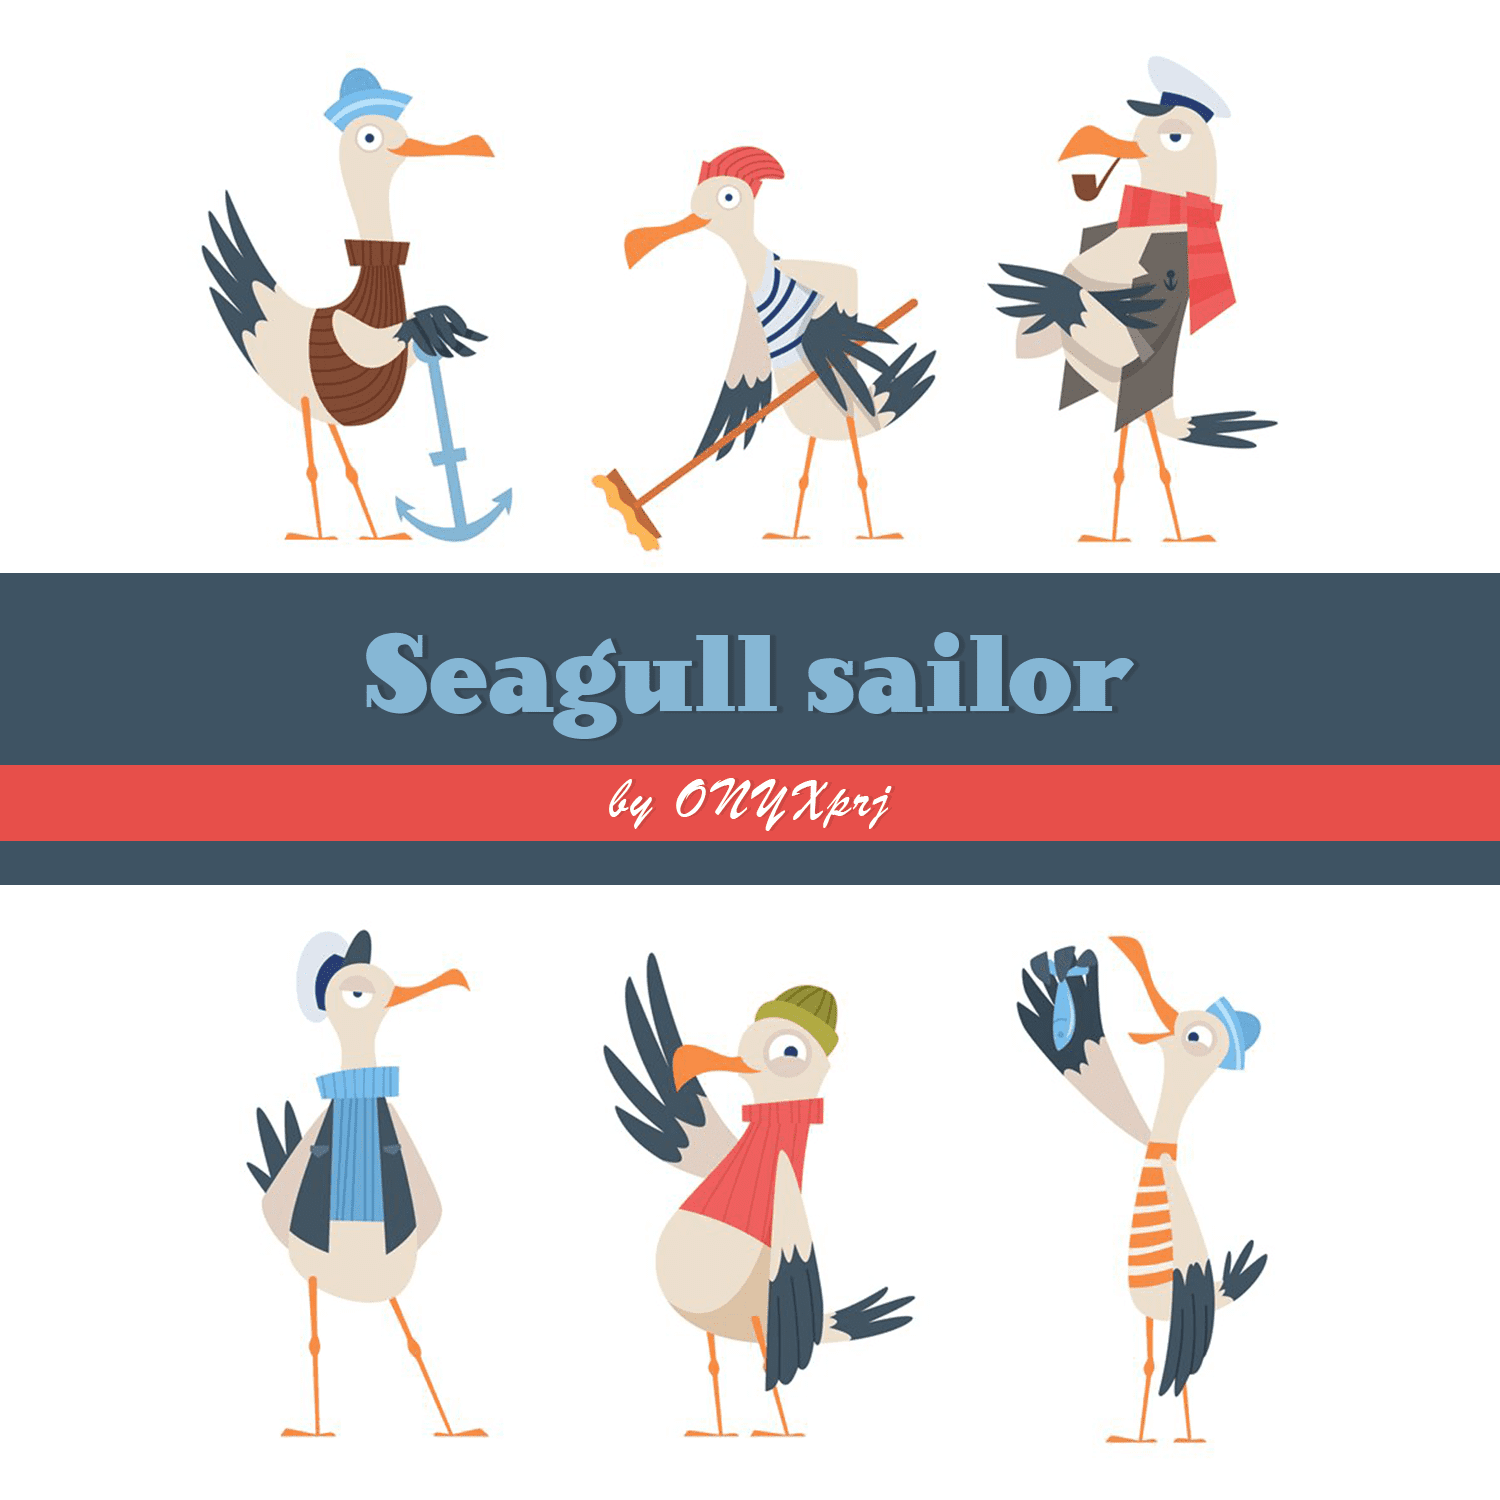 Seagull sailor. Cute funny sea or ocean bird in captain clot cover.